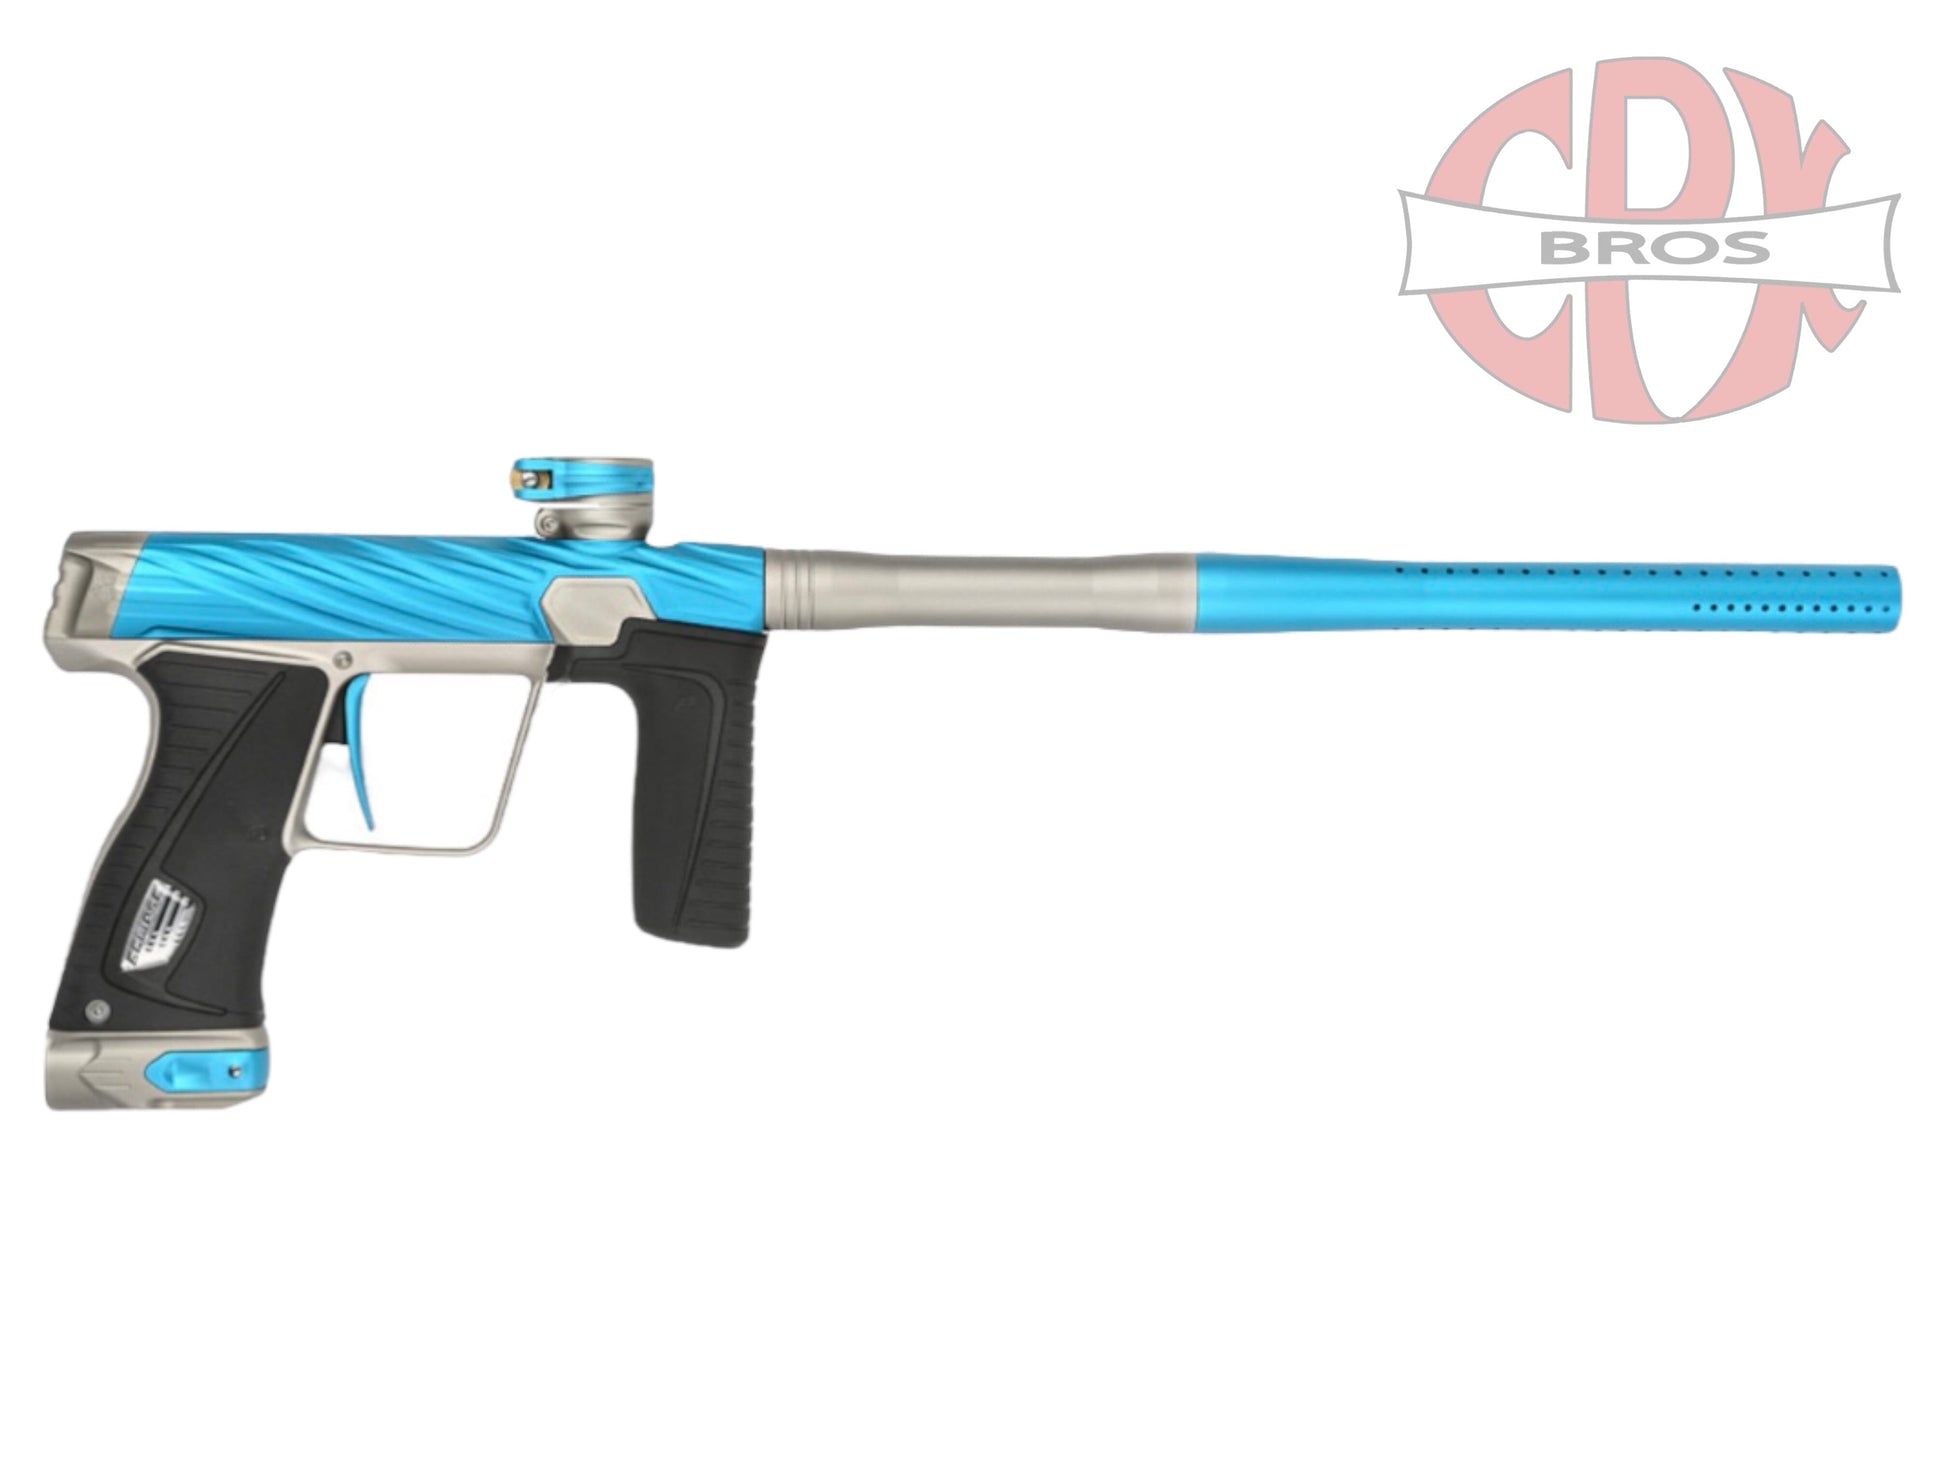 Used HK Army Orbit Gtek 180R- Blue/Pewter Paintball Gun from CPXBrosPaintball Buy/Sell/Trade Paintball Markers, Paintball Hoppers, Paintball Masks, and Hormesis Headbands